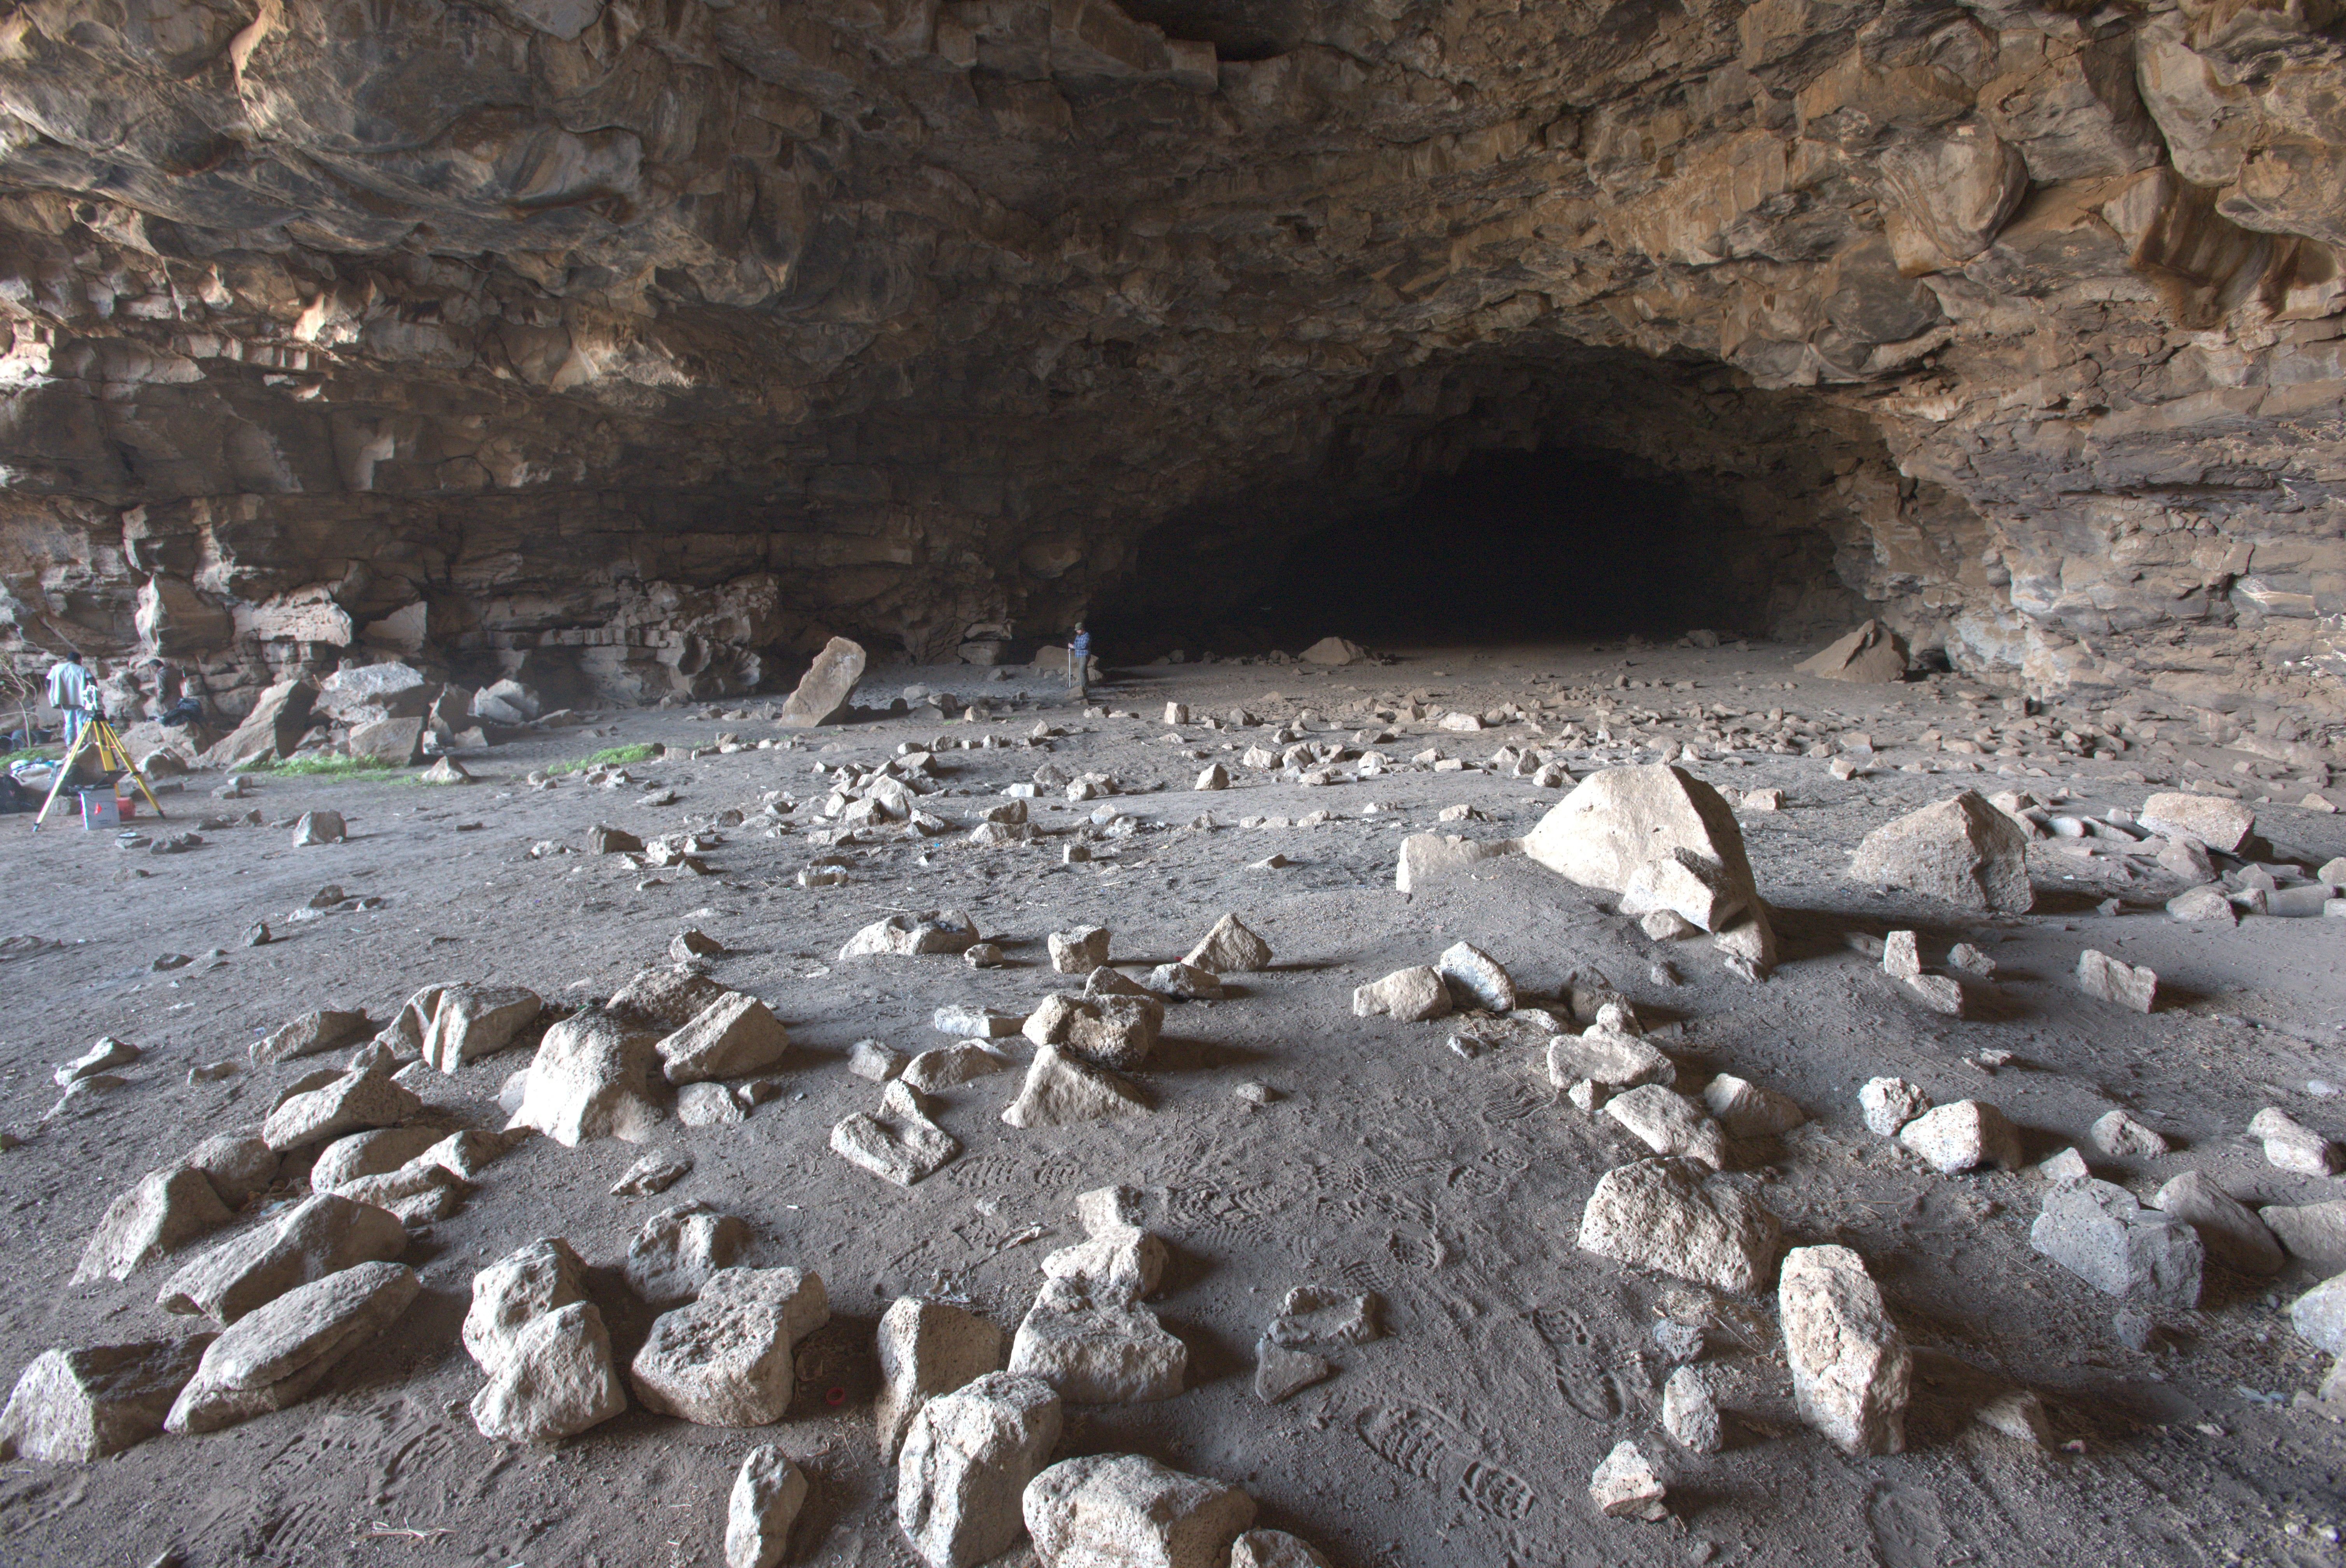 The entrance to Umm Jirsan cave